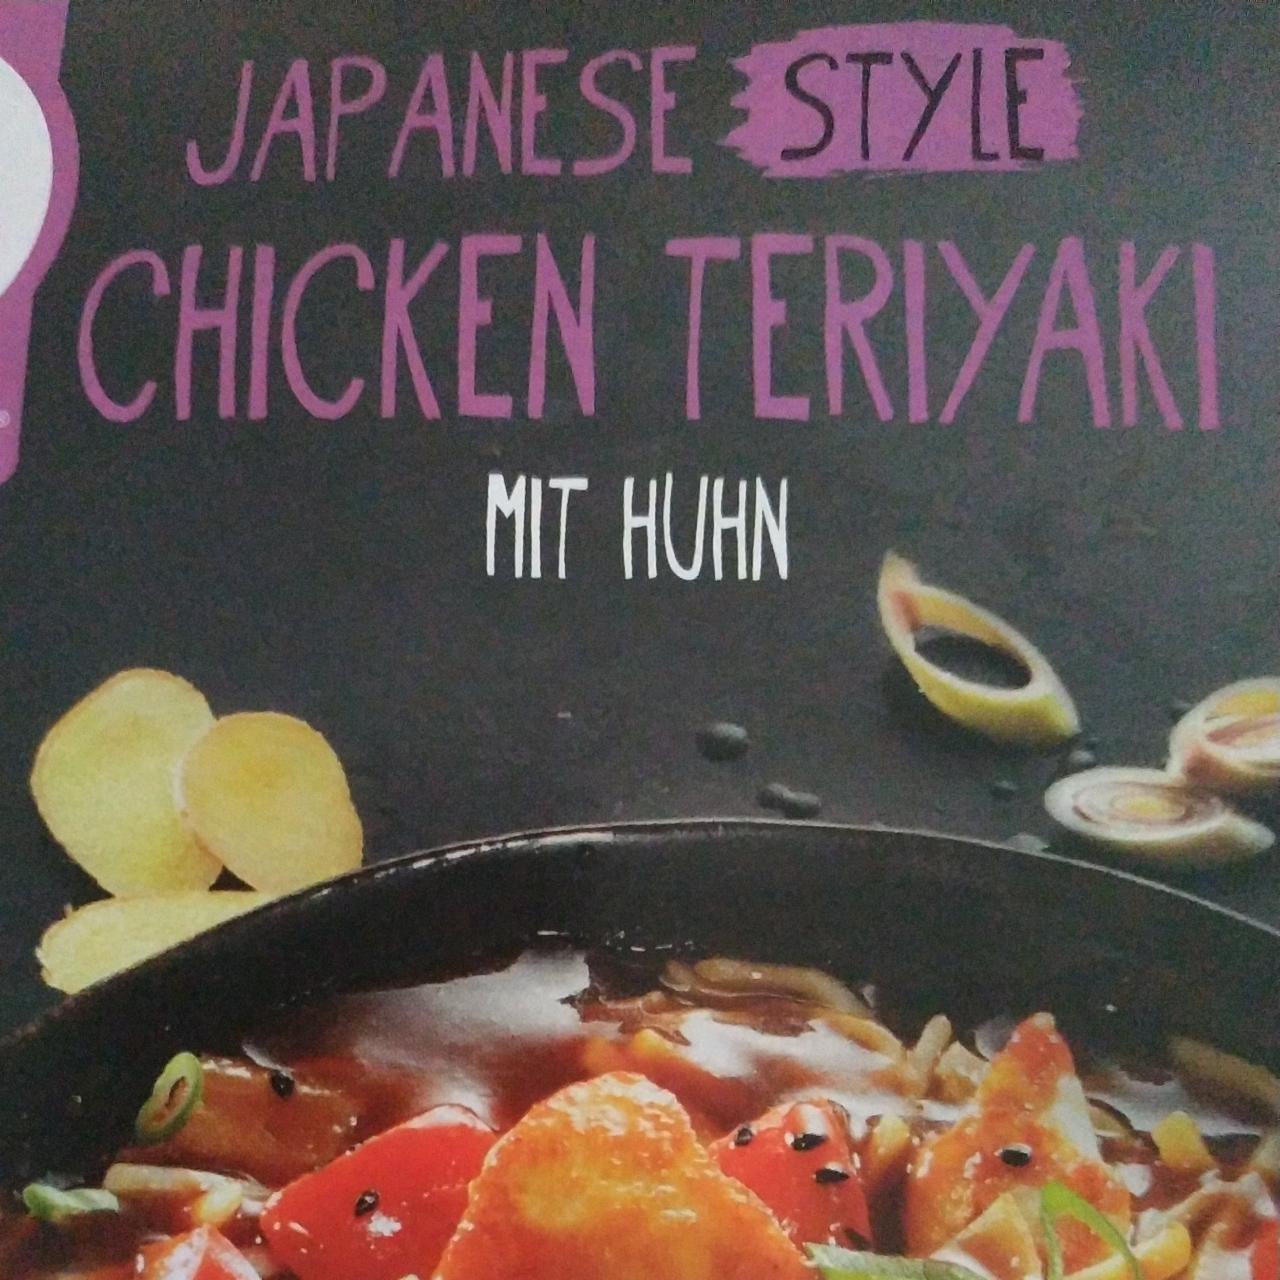 Фото - Вермішель теріякі по-японськи Japenese Style Chicken Teriyaki Youcook